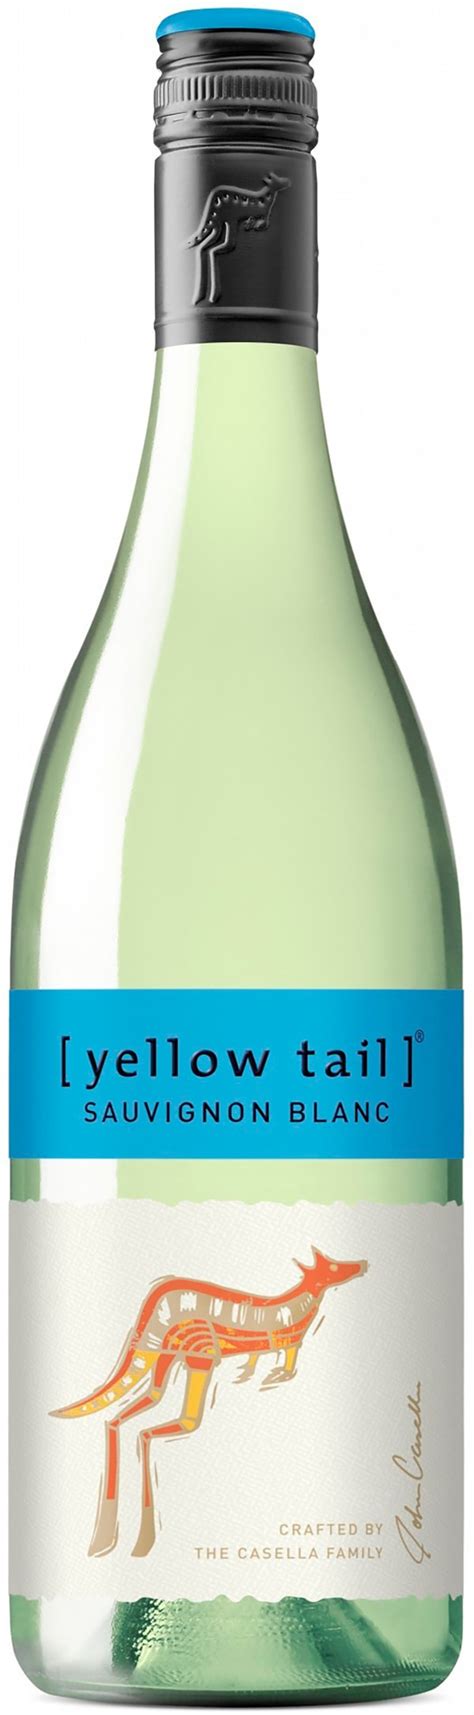 Yellow Tail Sauvignon Blanc commercials